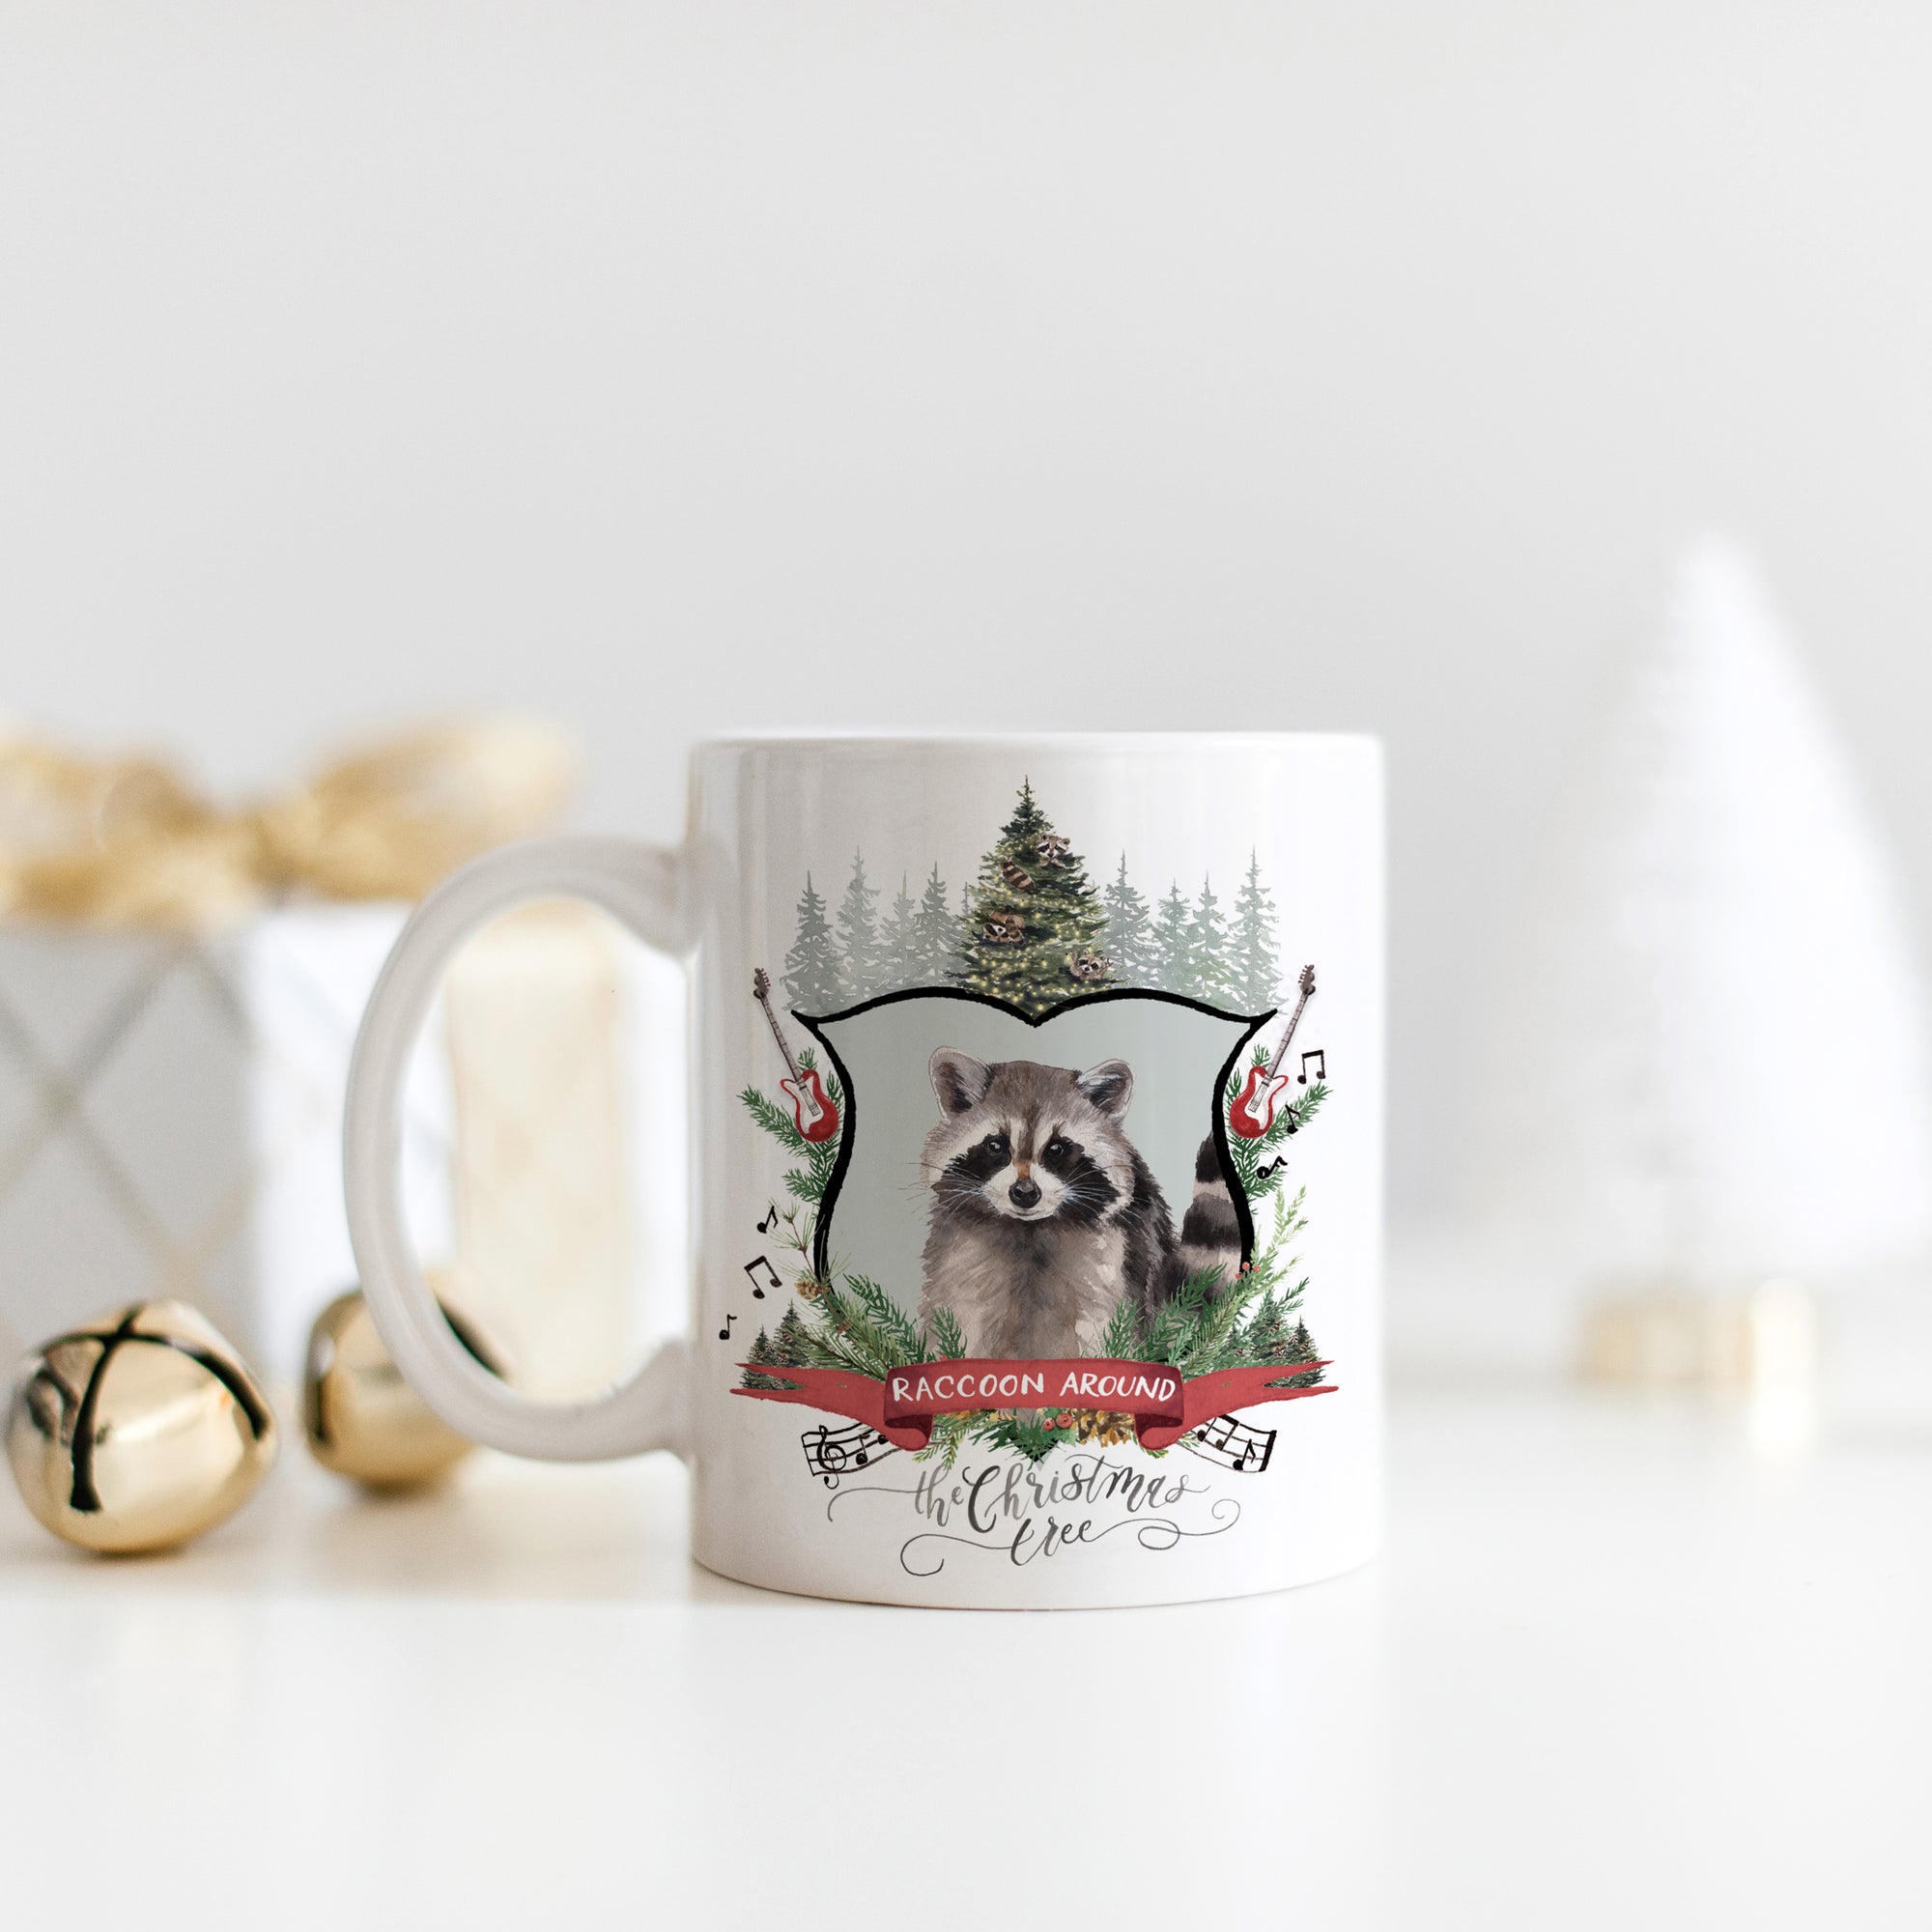 Raccoon Around the Christmas Tree Mug